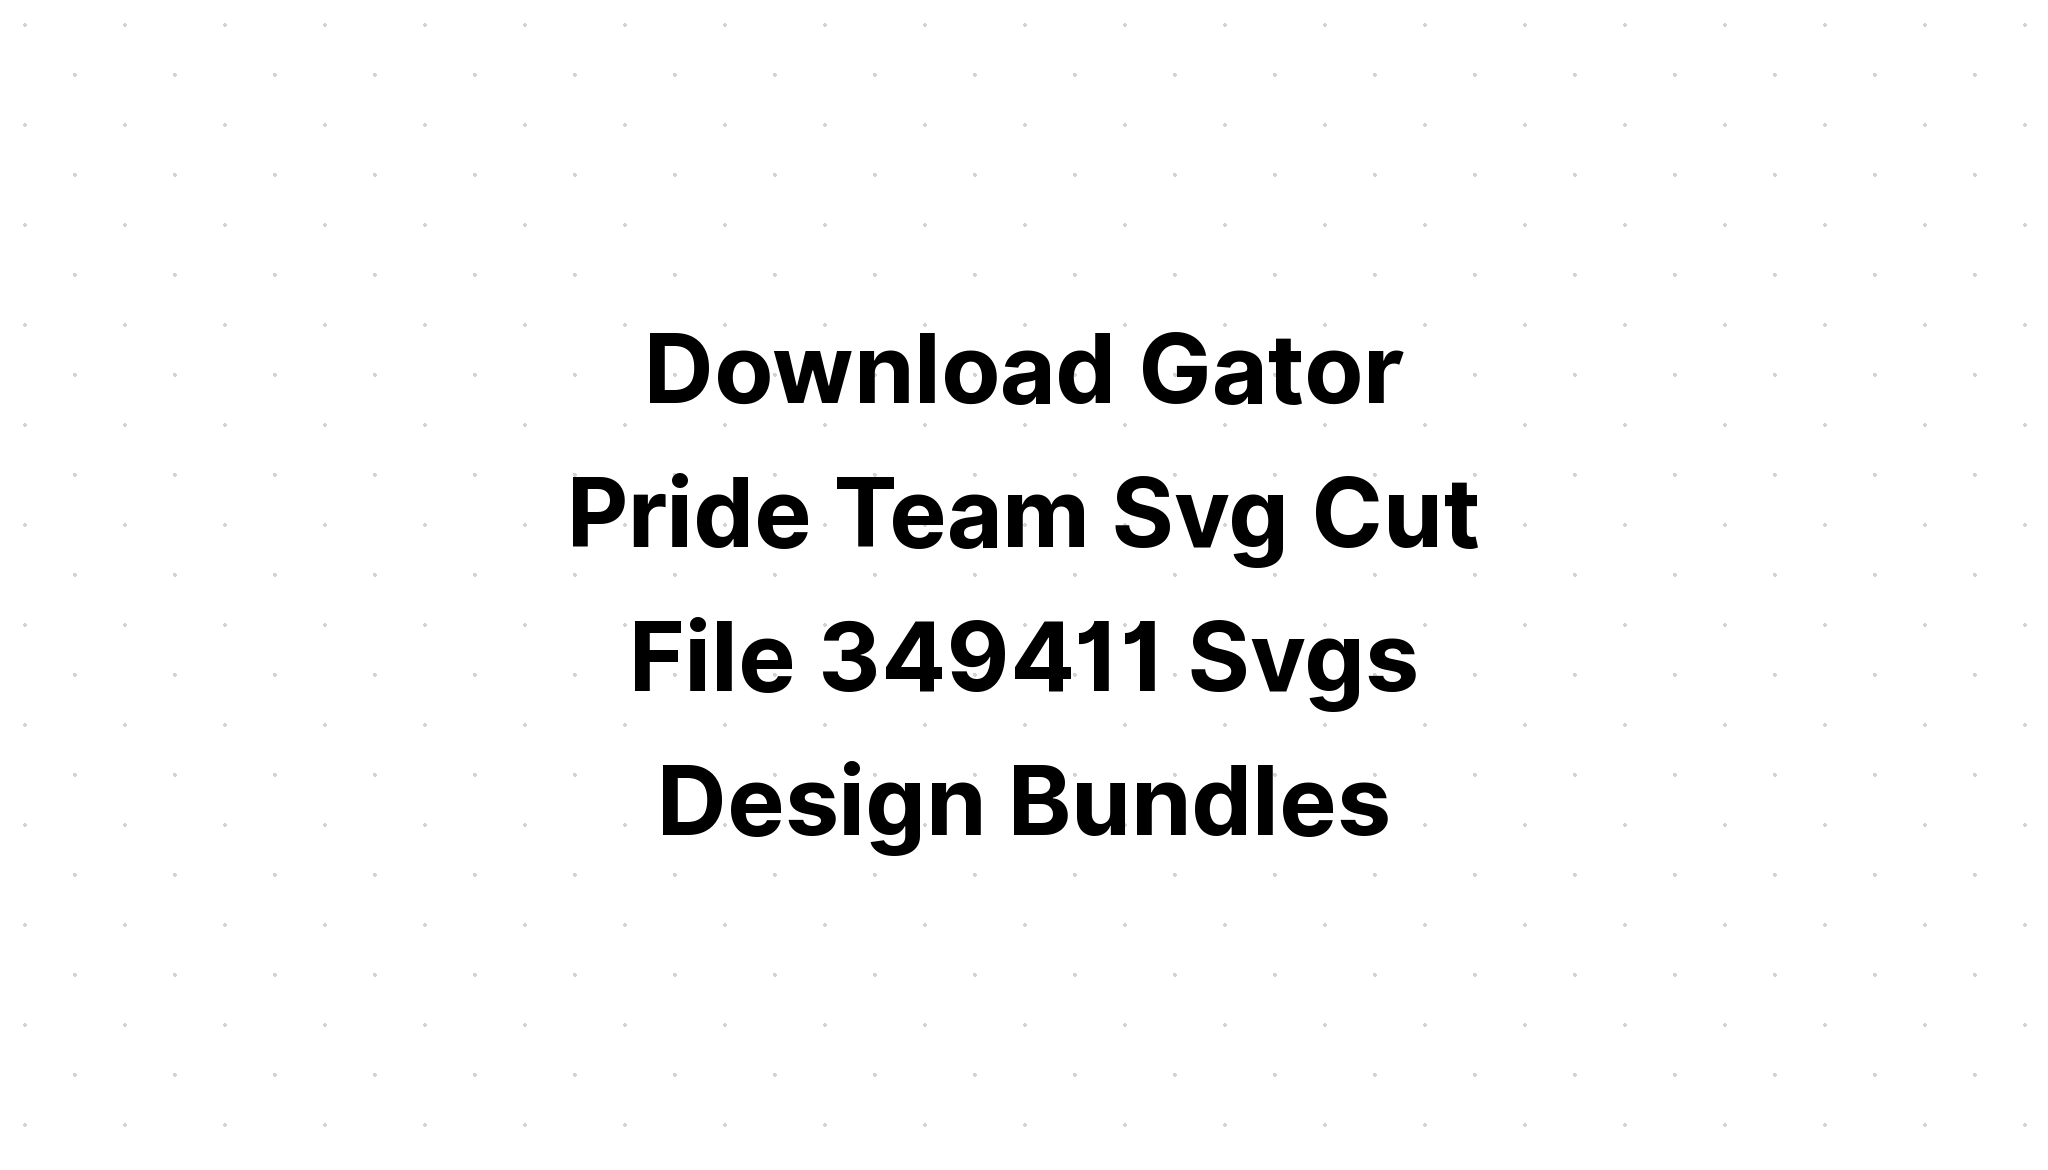 Download Gator Monogram Svg - Layered SVG Cut File